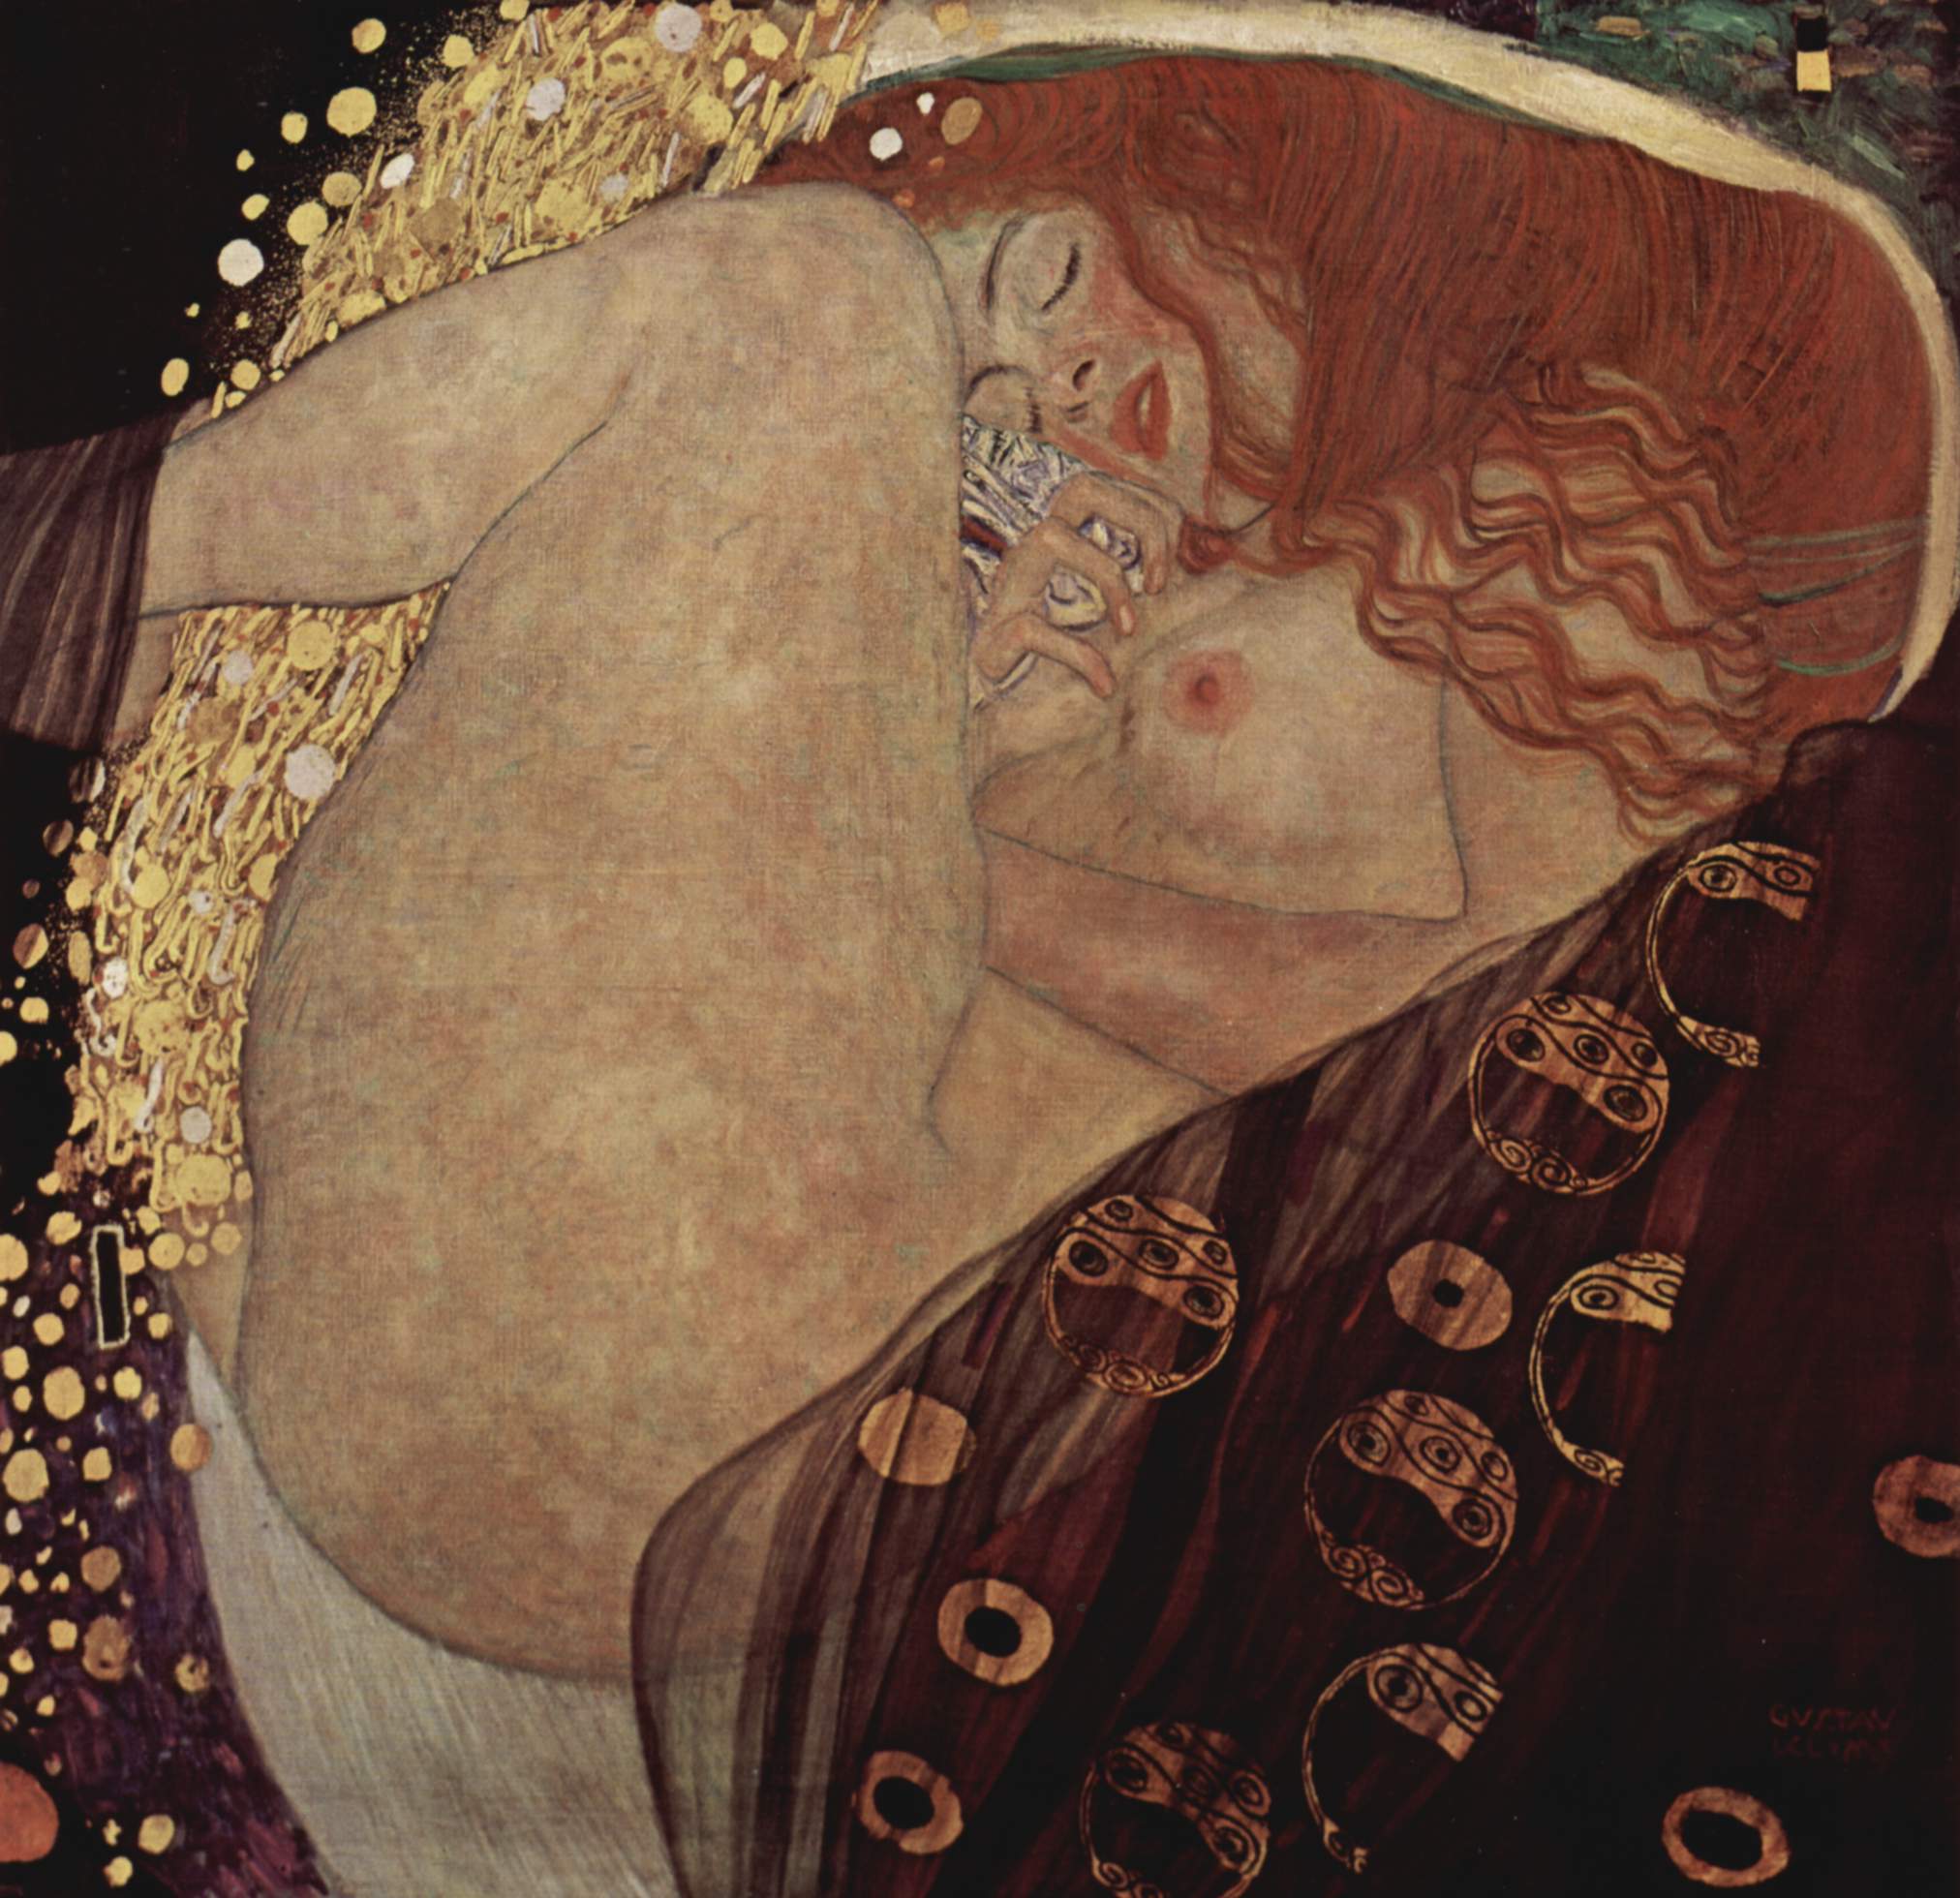 Danae by Gustav Klimt - 1908 coleção privada